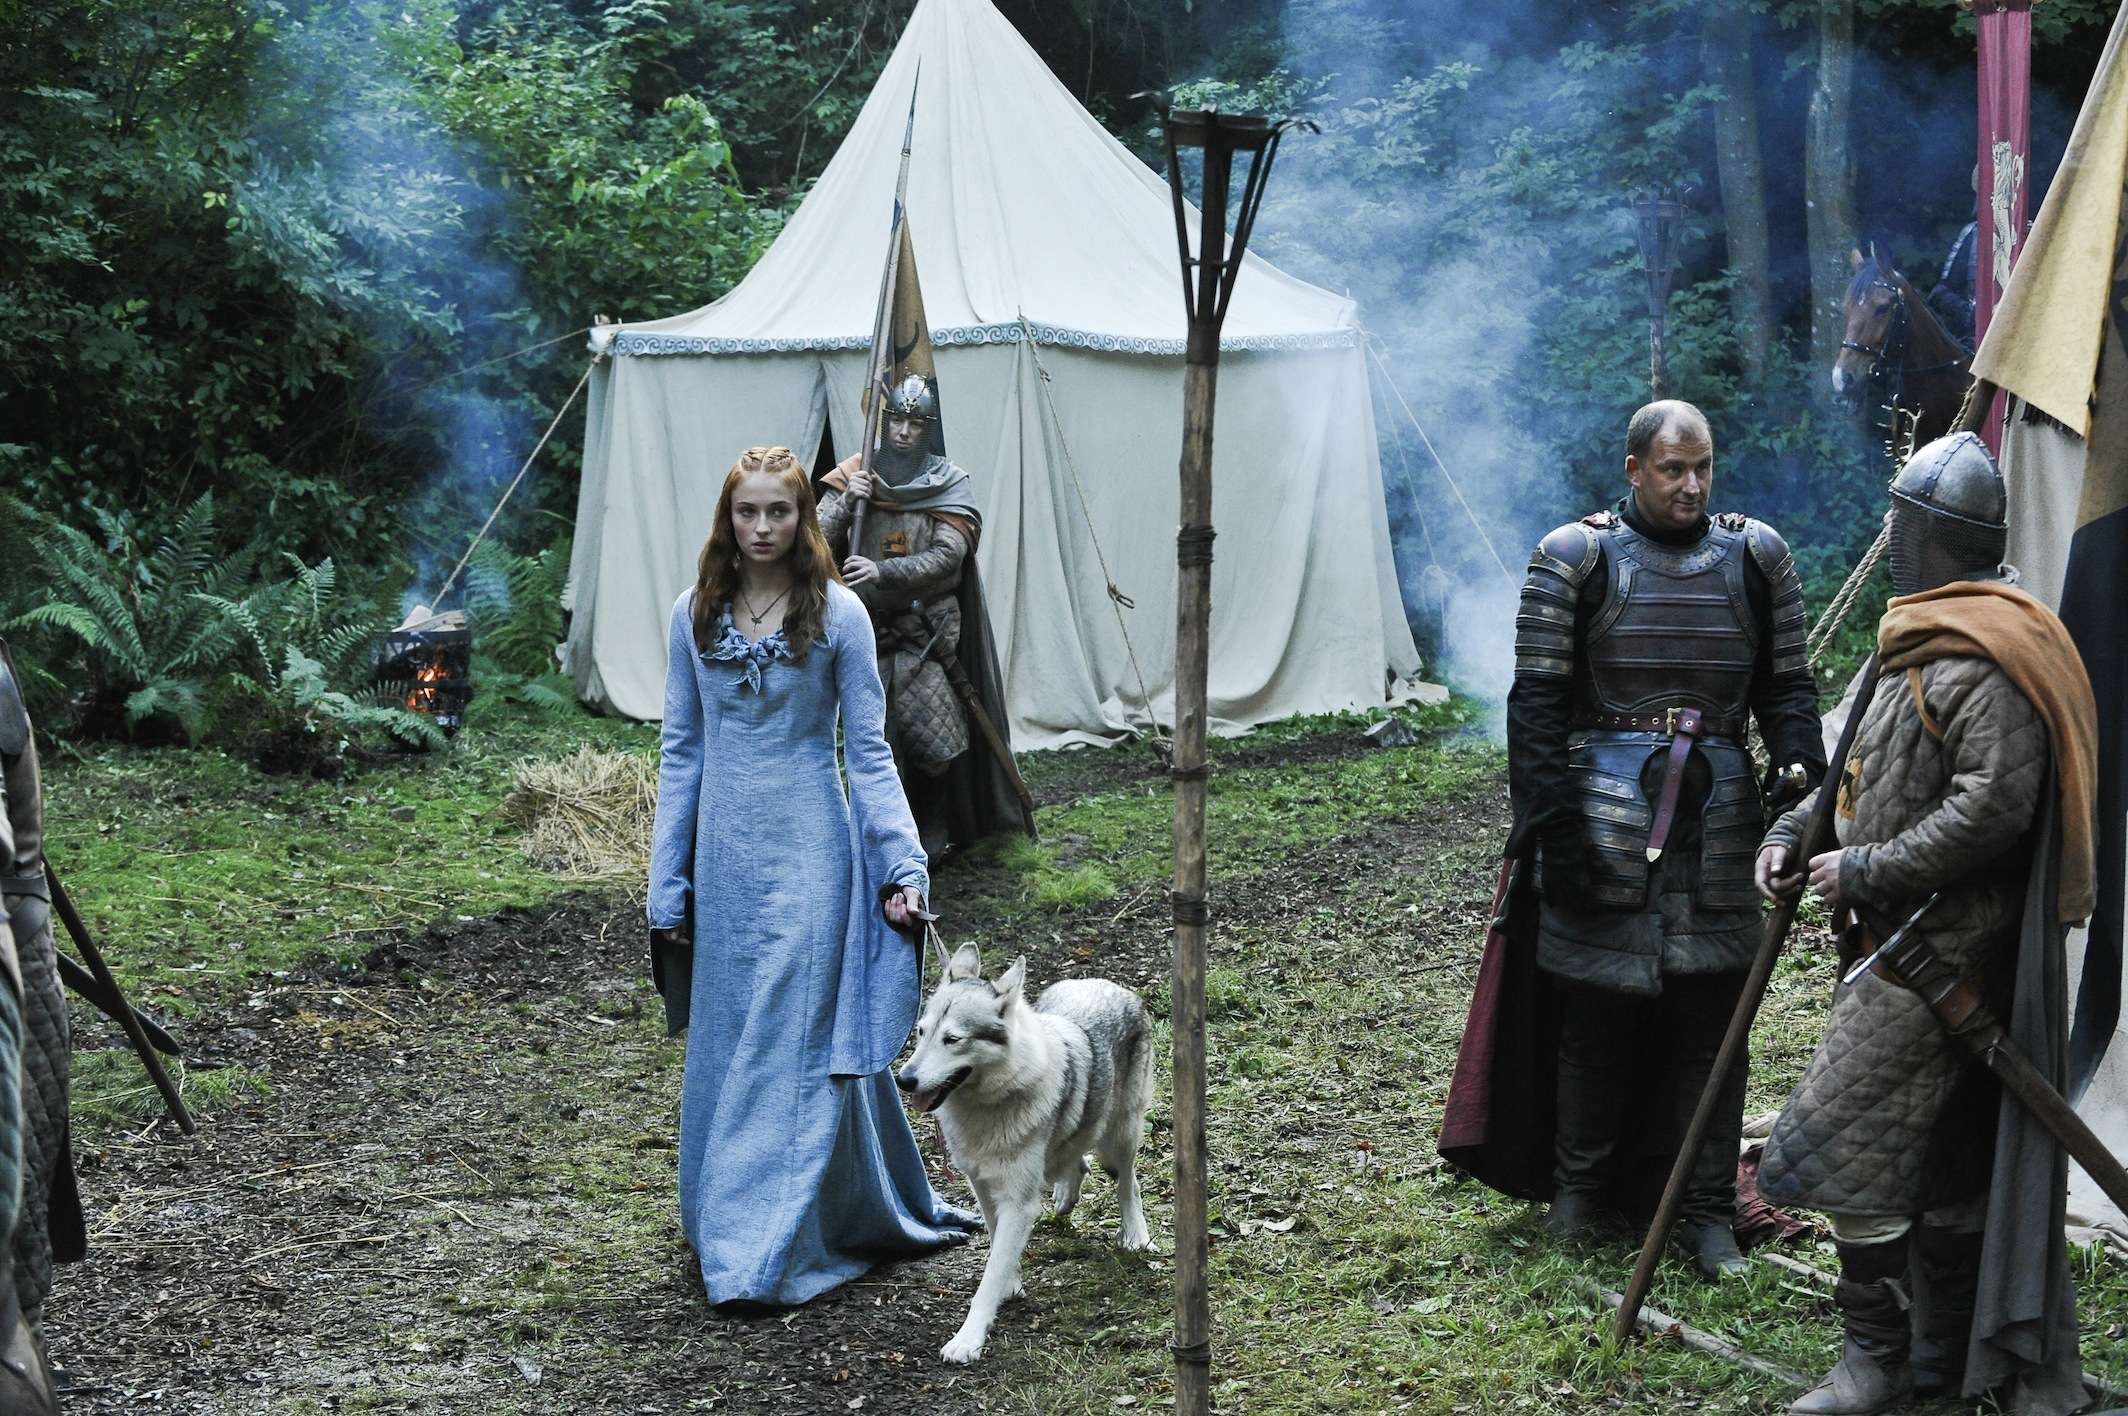 Descarga gratuita de fondo de pantalla para móvil de Juego De Tronos, Series De Televisión, Sansa Stark, Sofía Turner.